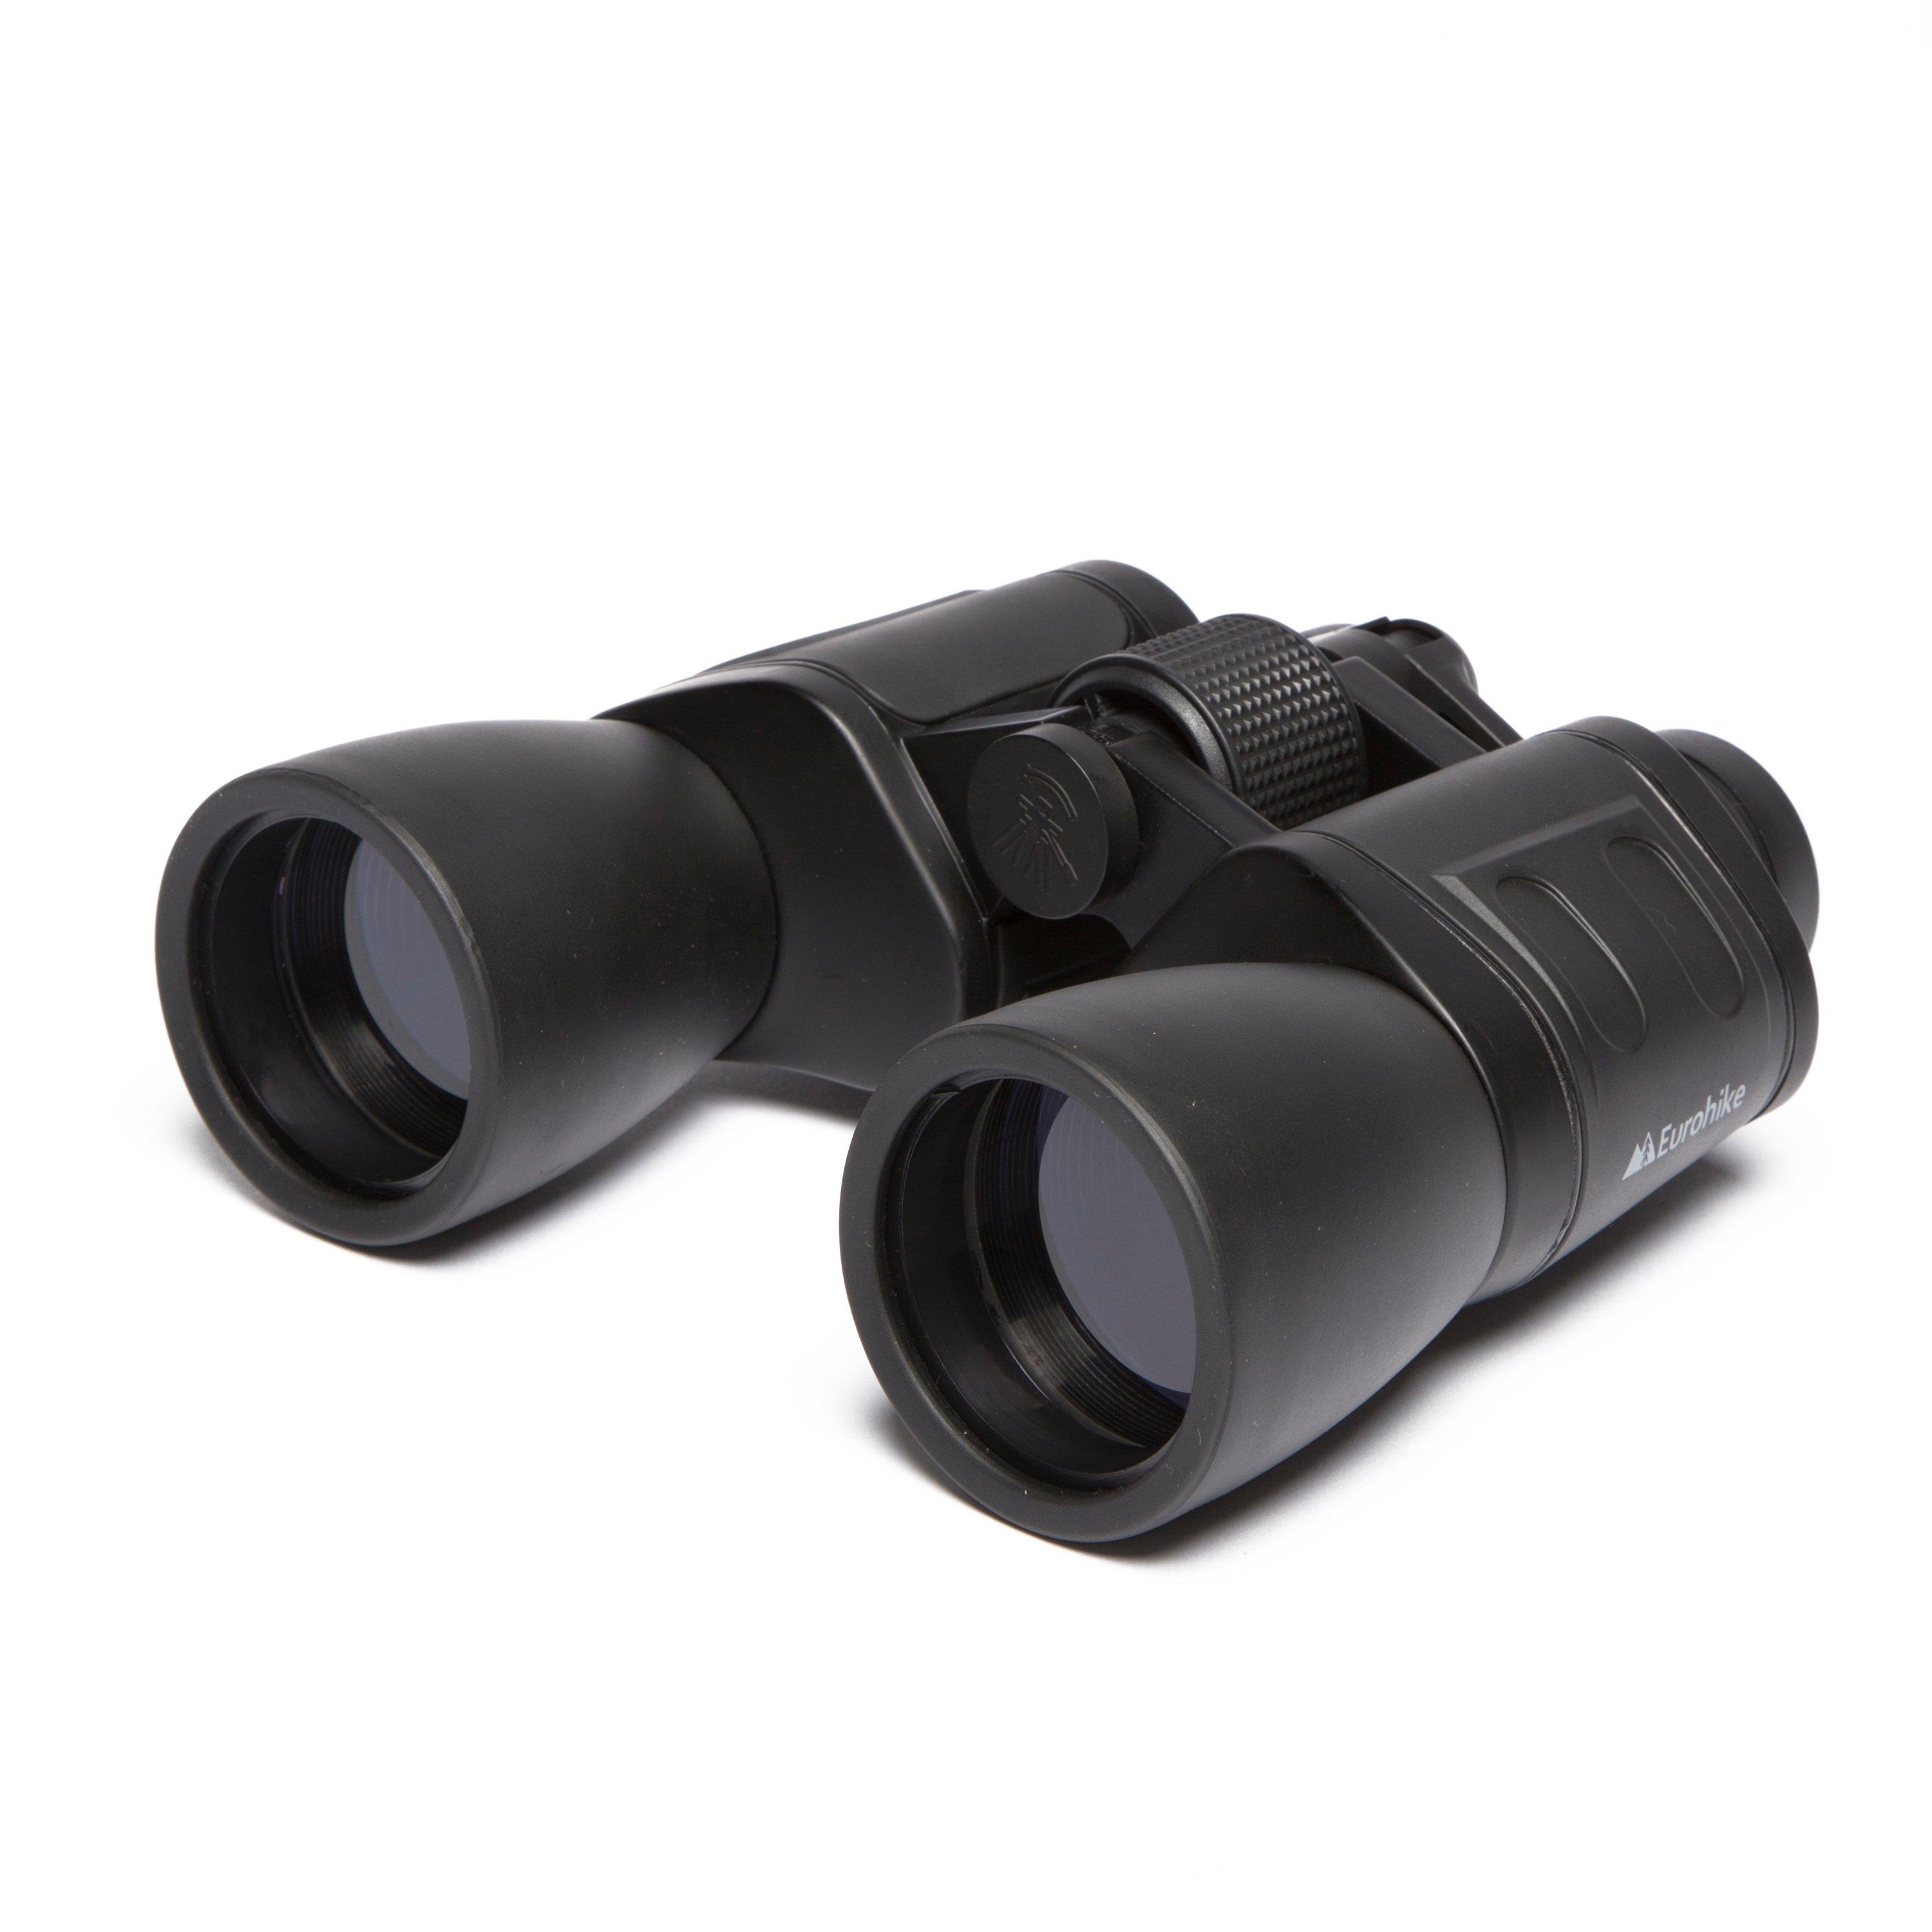  Eurohike 10X50 Binoculars, Black